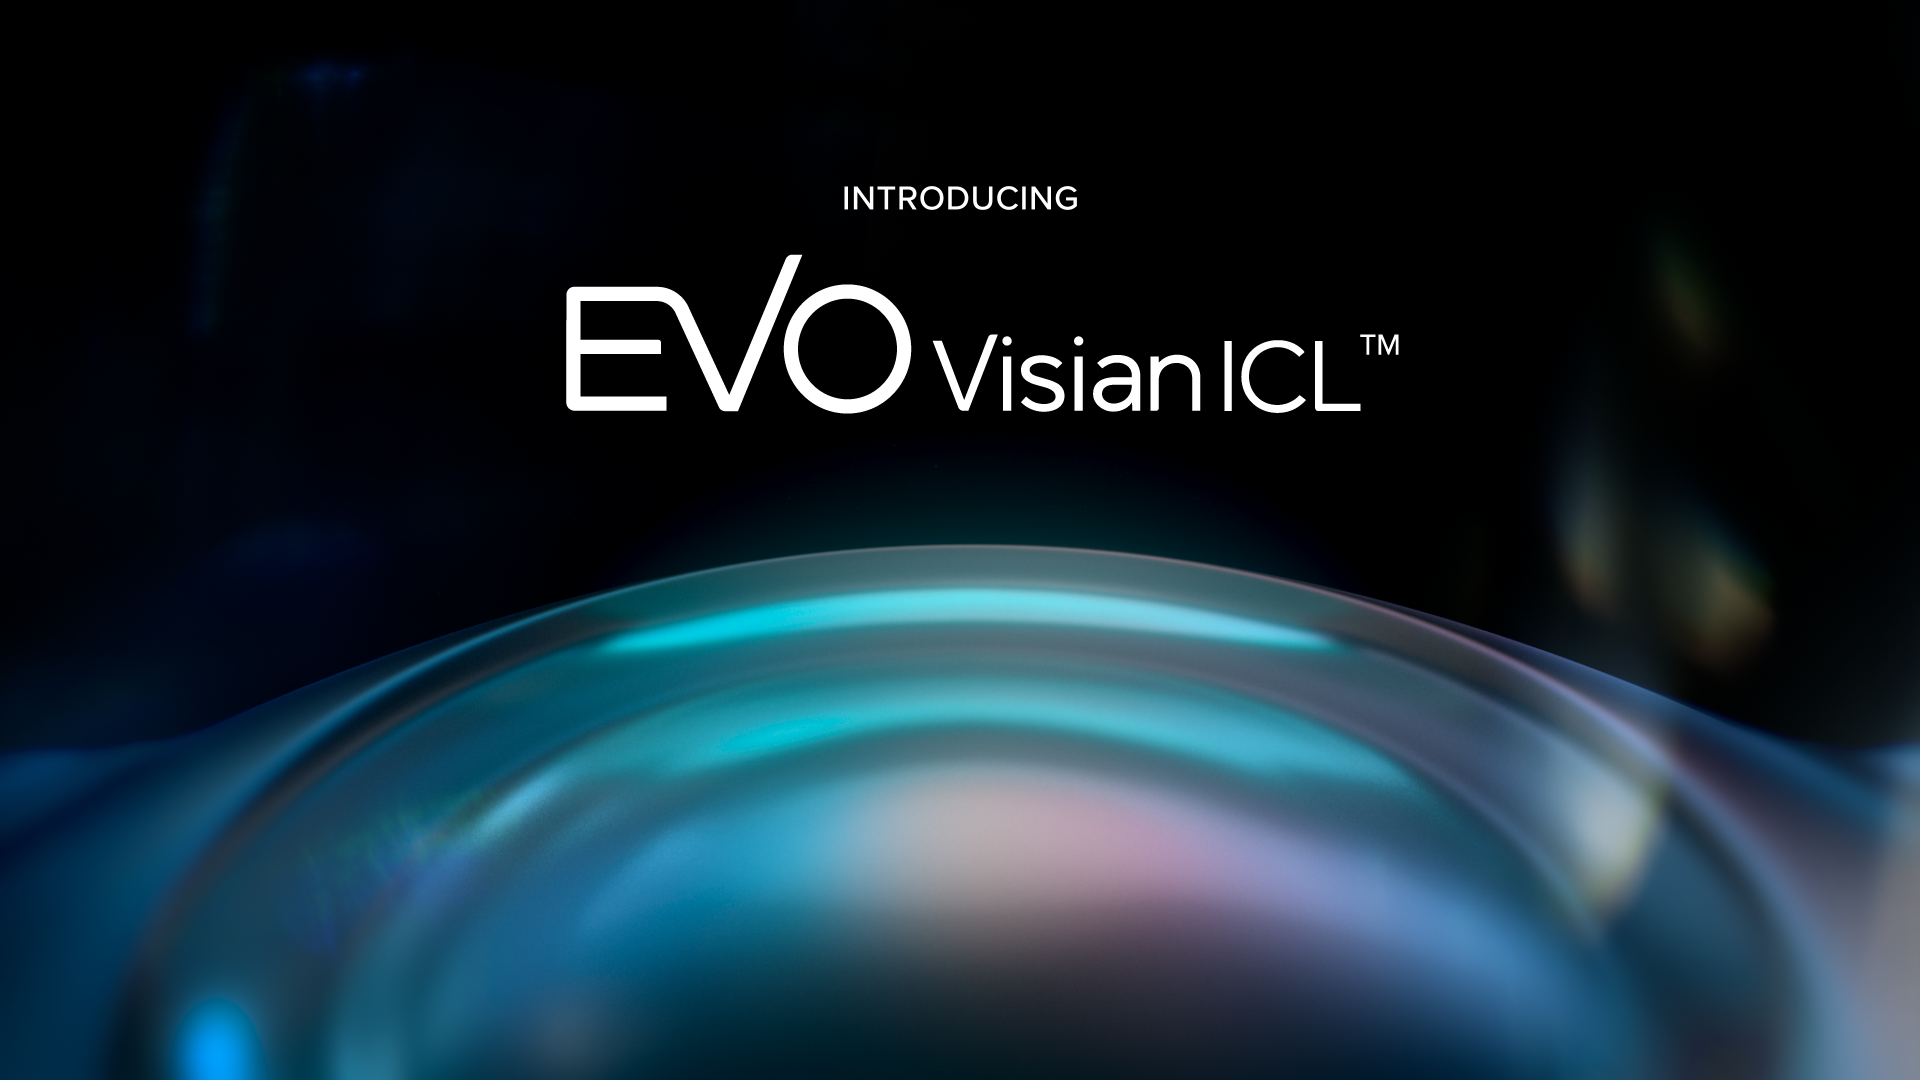 STAAR_3D-Video_StyleFrames_Introducing-EVO-Visian_Test_01b_v1 (0-00-00-09)